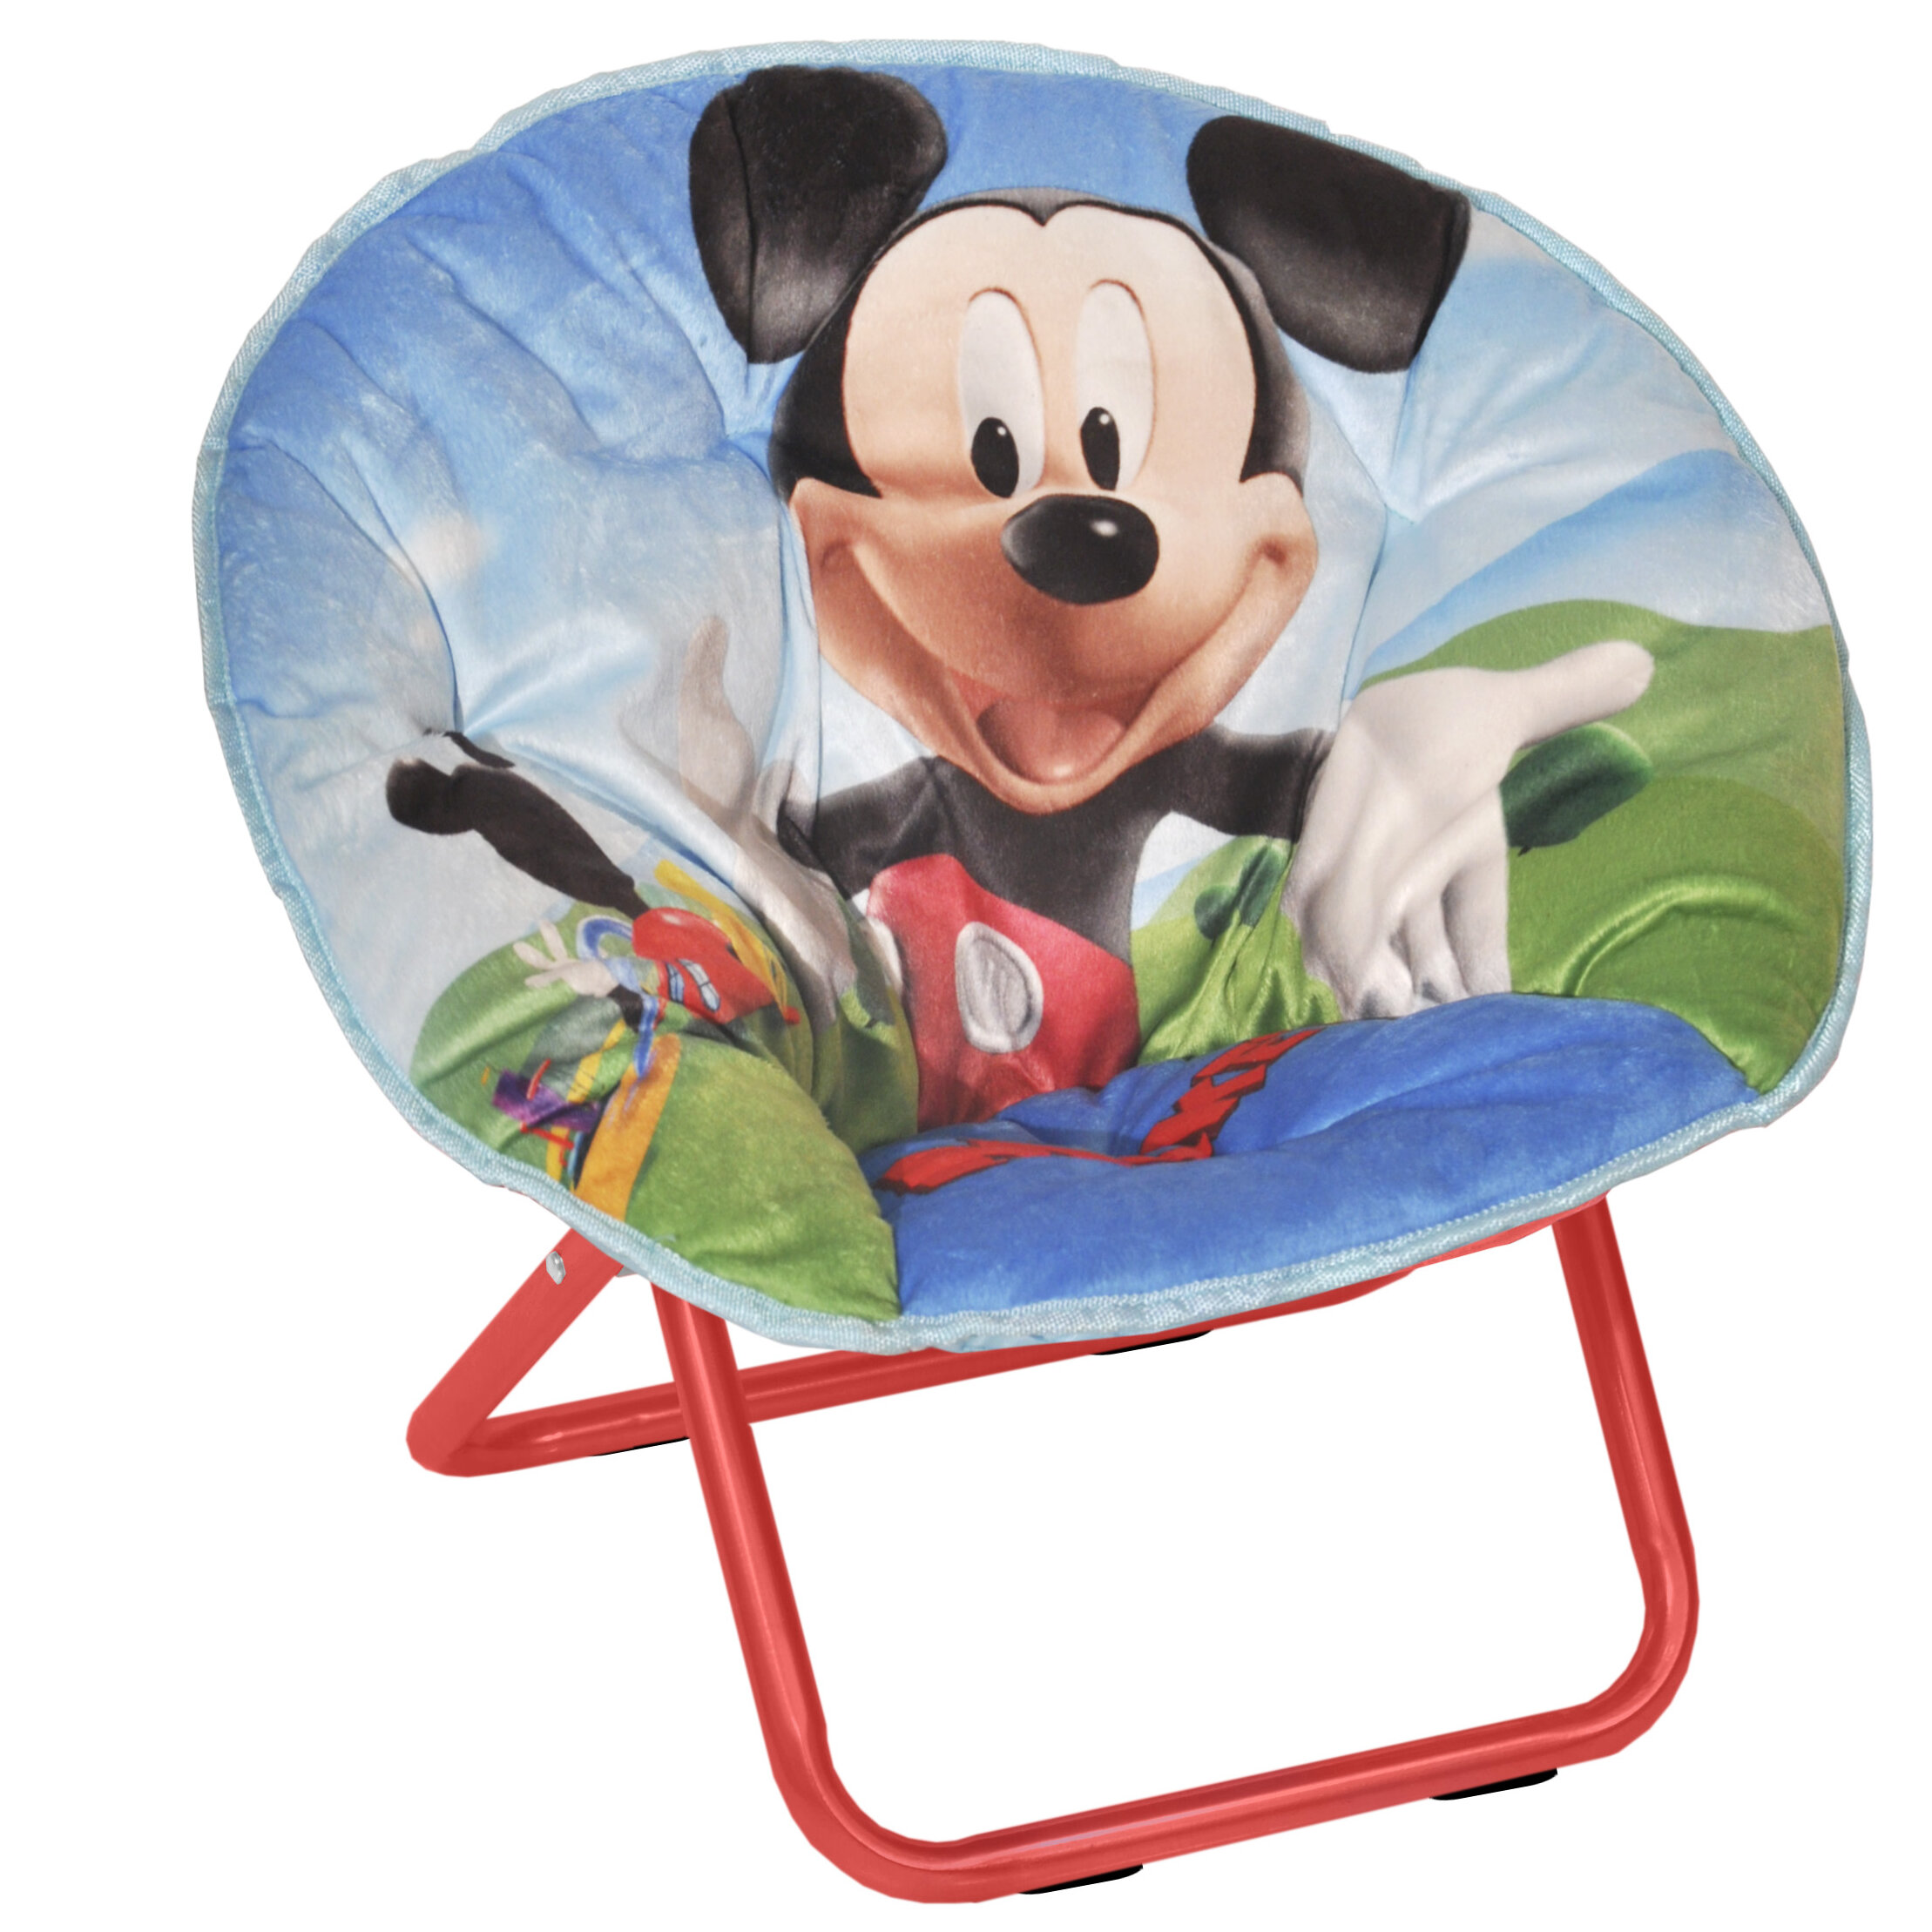 Idea Nuova Toddler Mini Kids Saucer Chair Wayfair